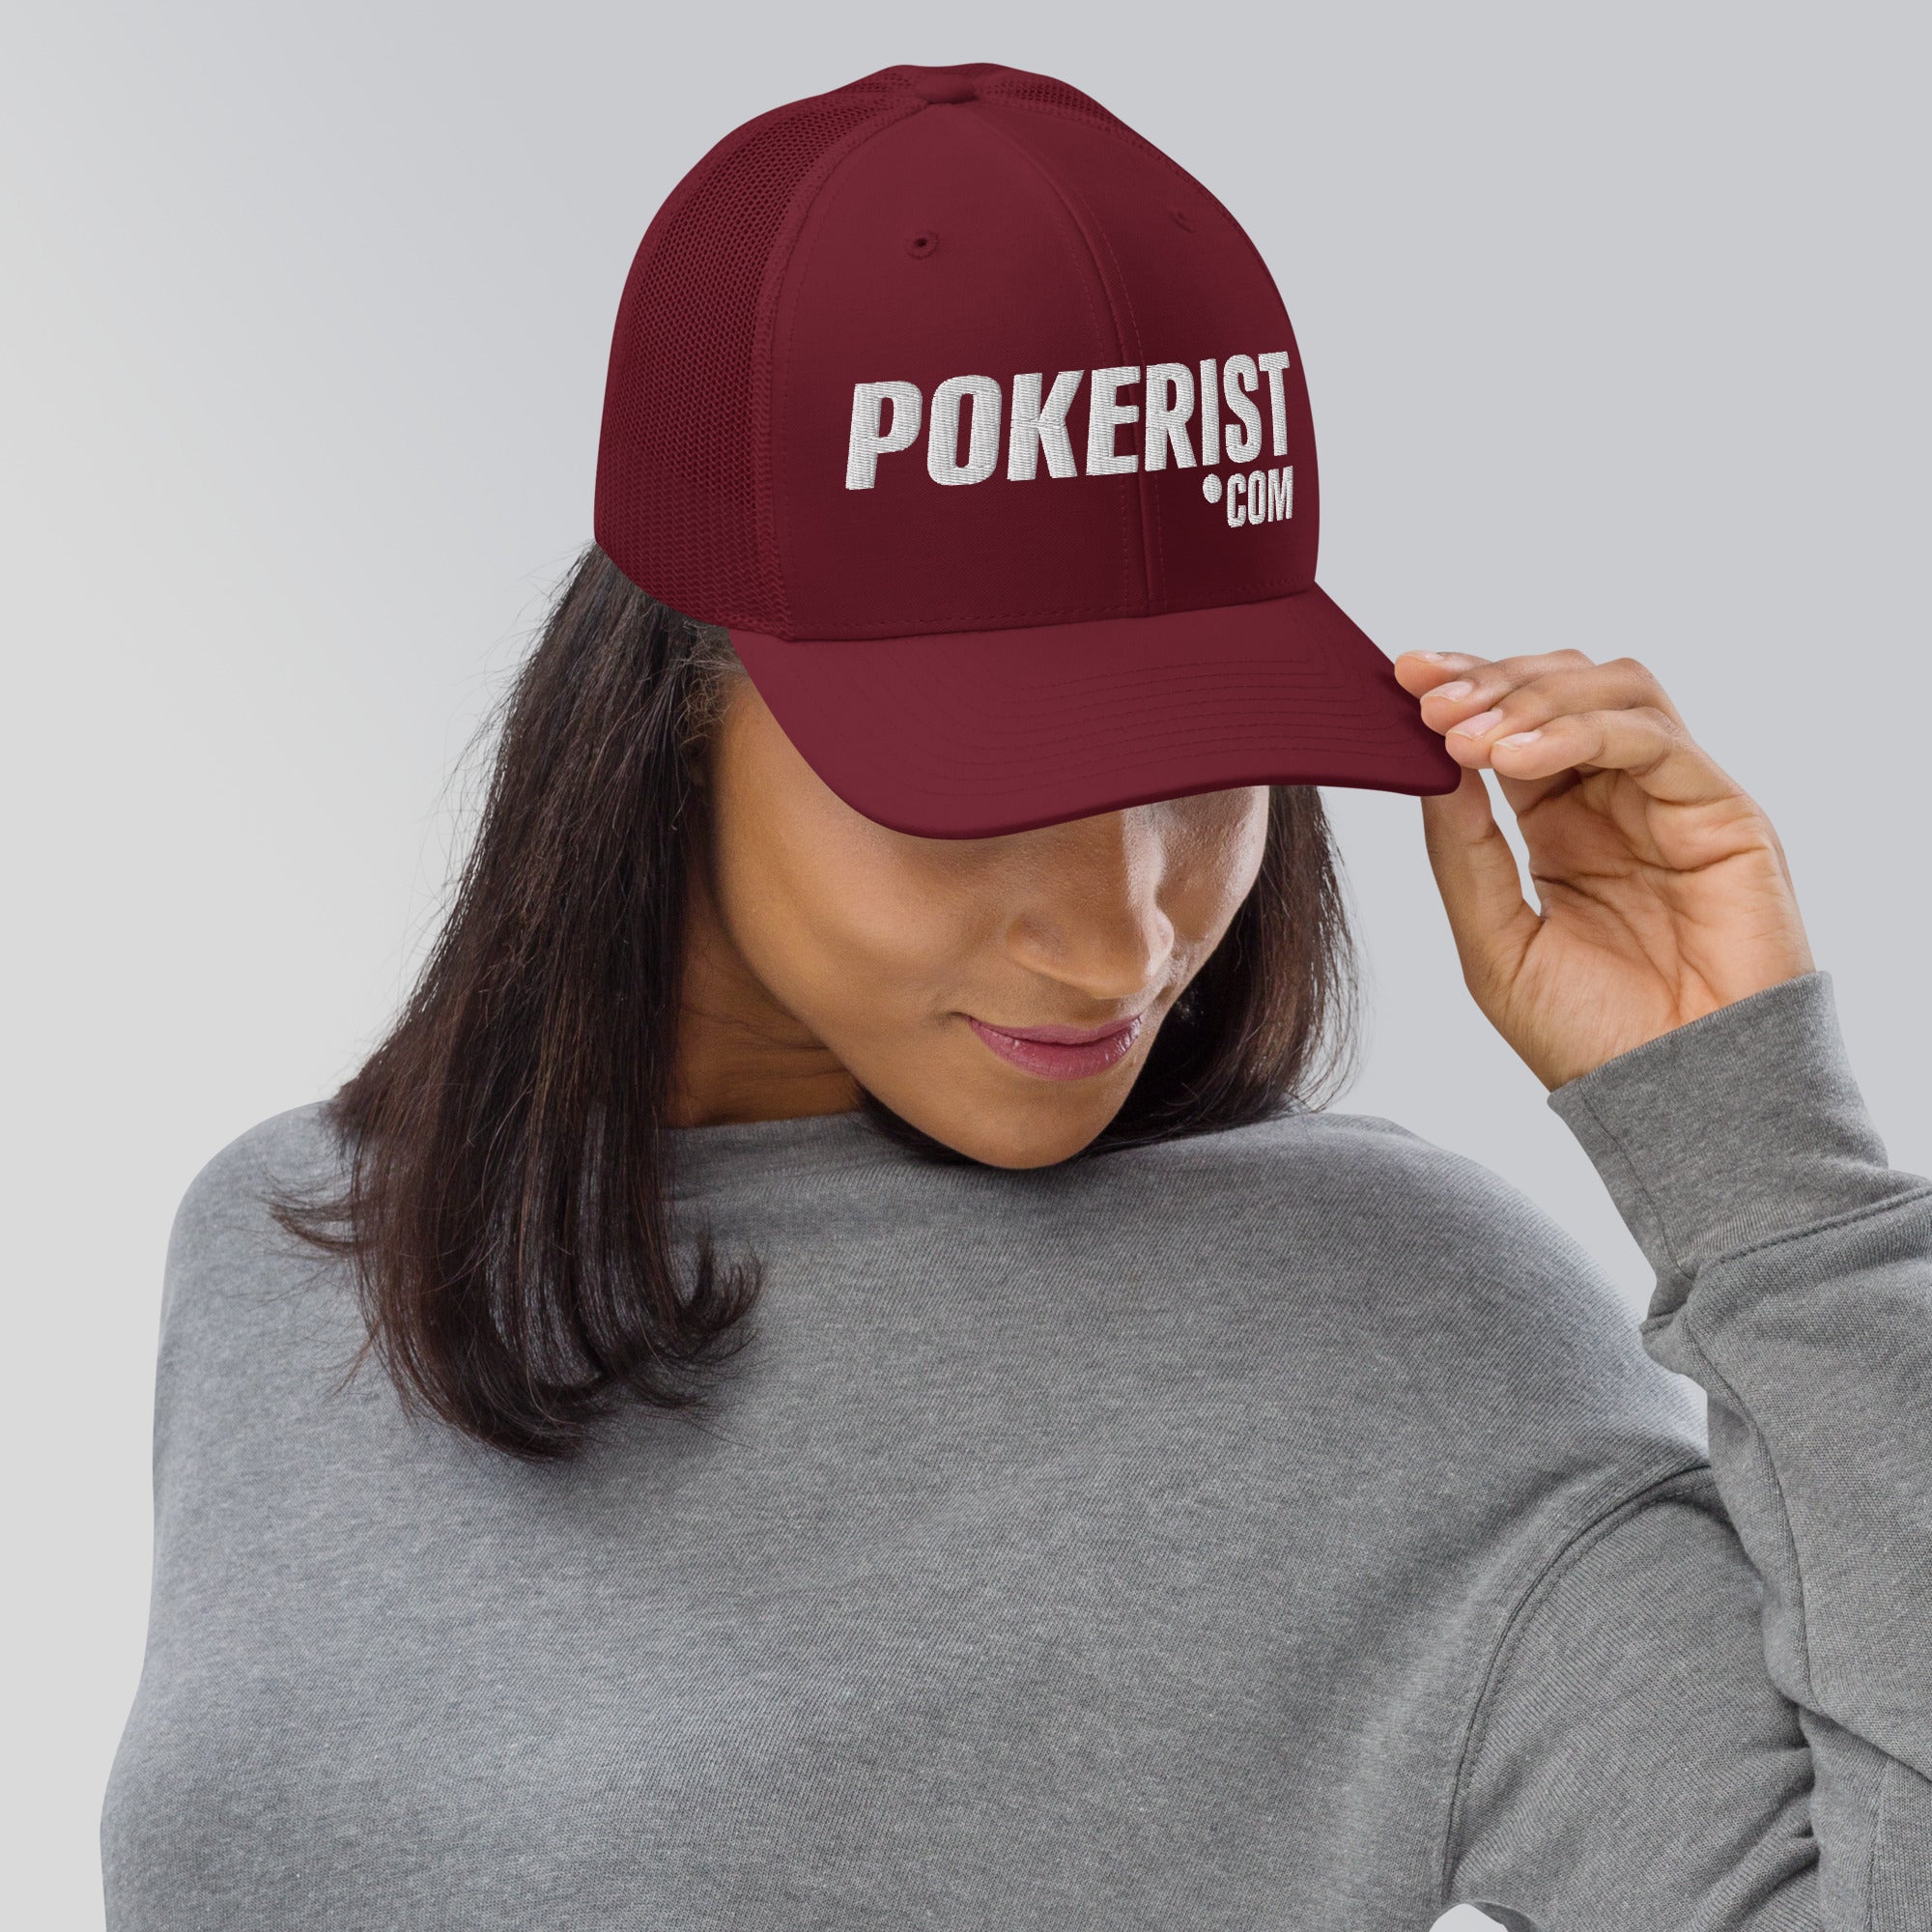 Pokerist 2.0 - Trucker Cap